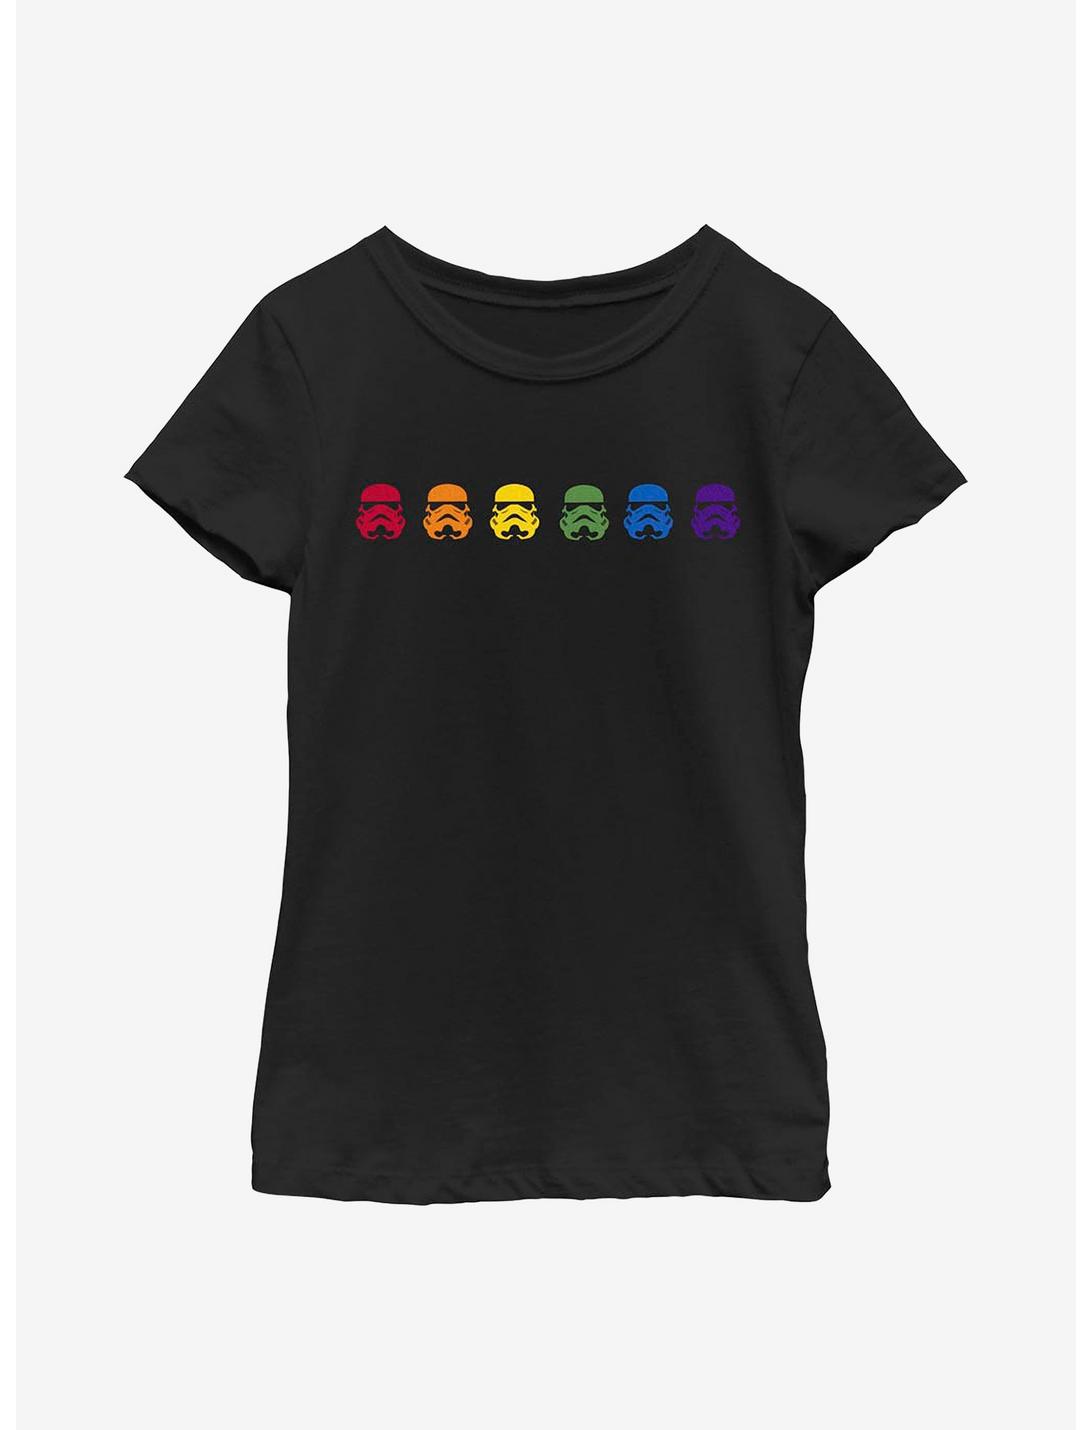 Star Wars Pride Horizontal Youth T-Shirt, BLACK, hi-res